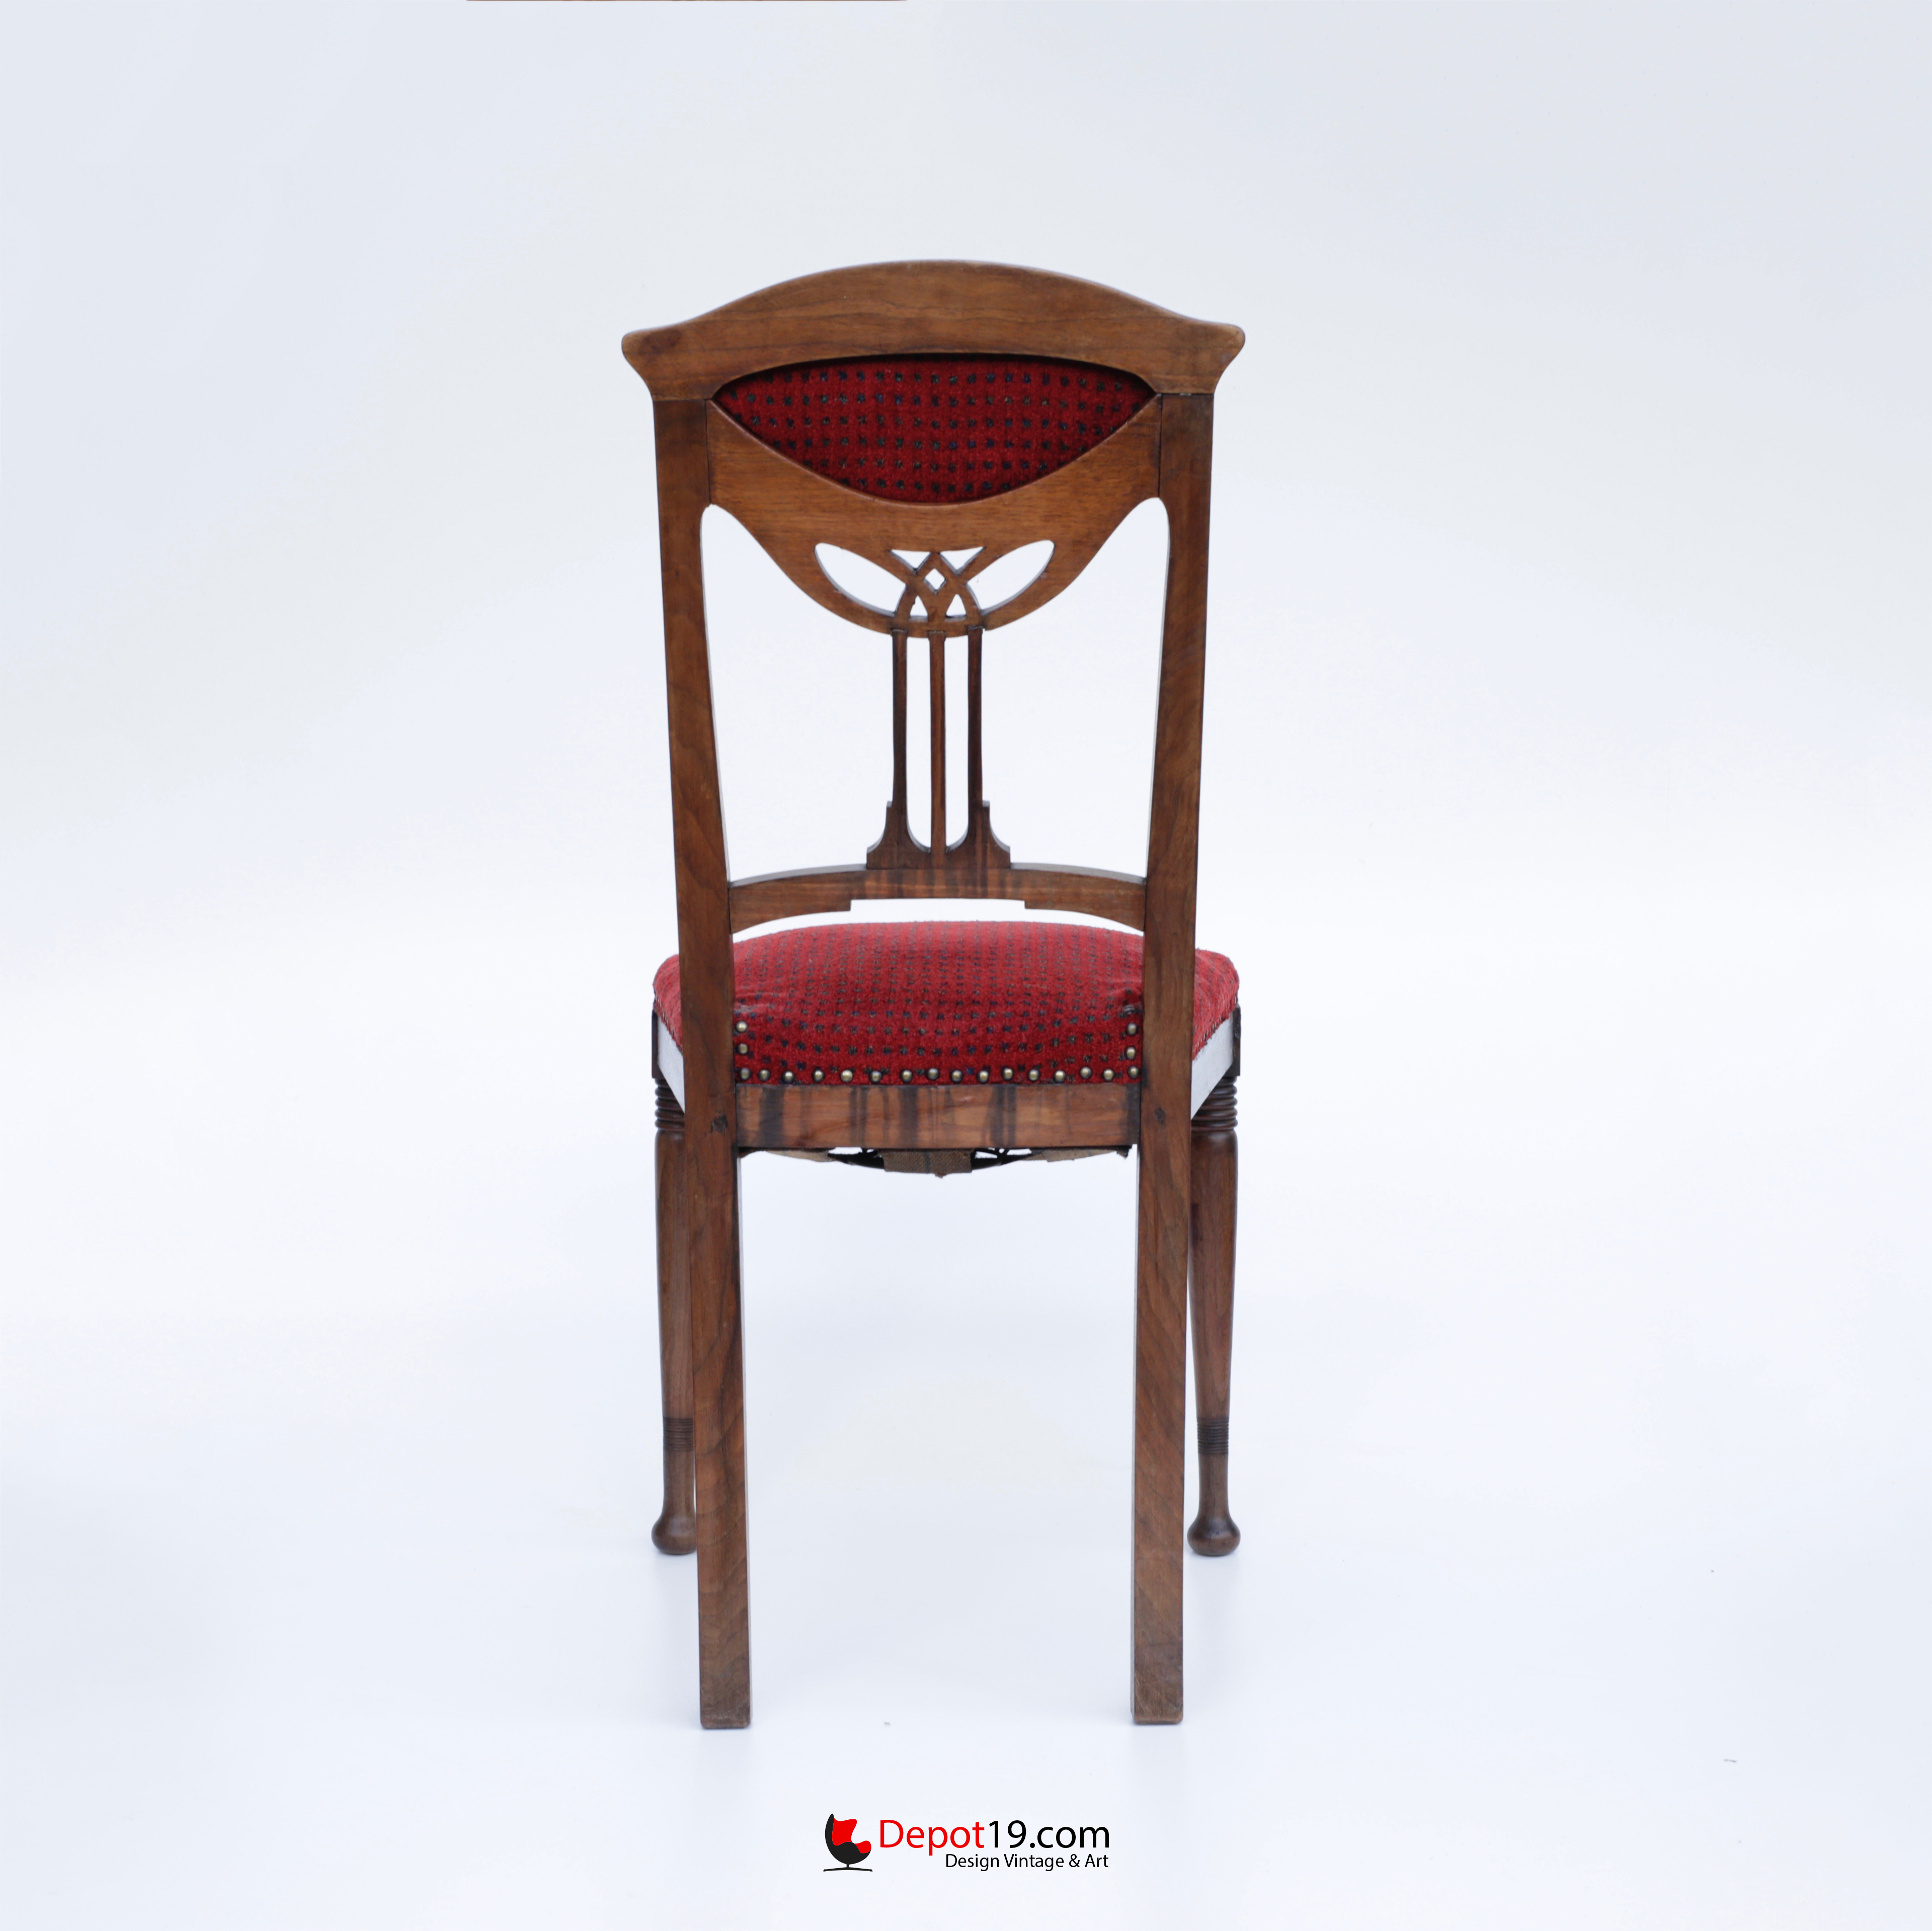 Goede Art Nouveau Art Deco style chair with wood carvings | Depot 19 KS-05